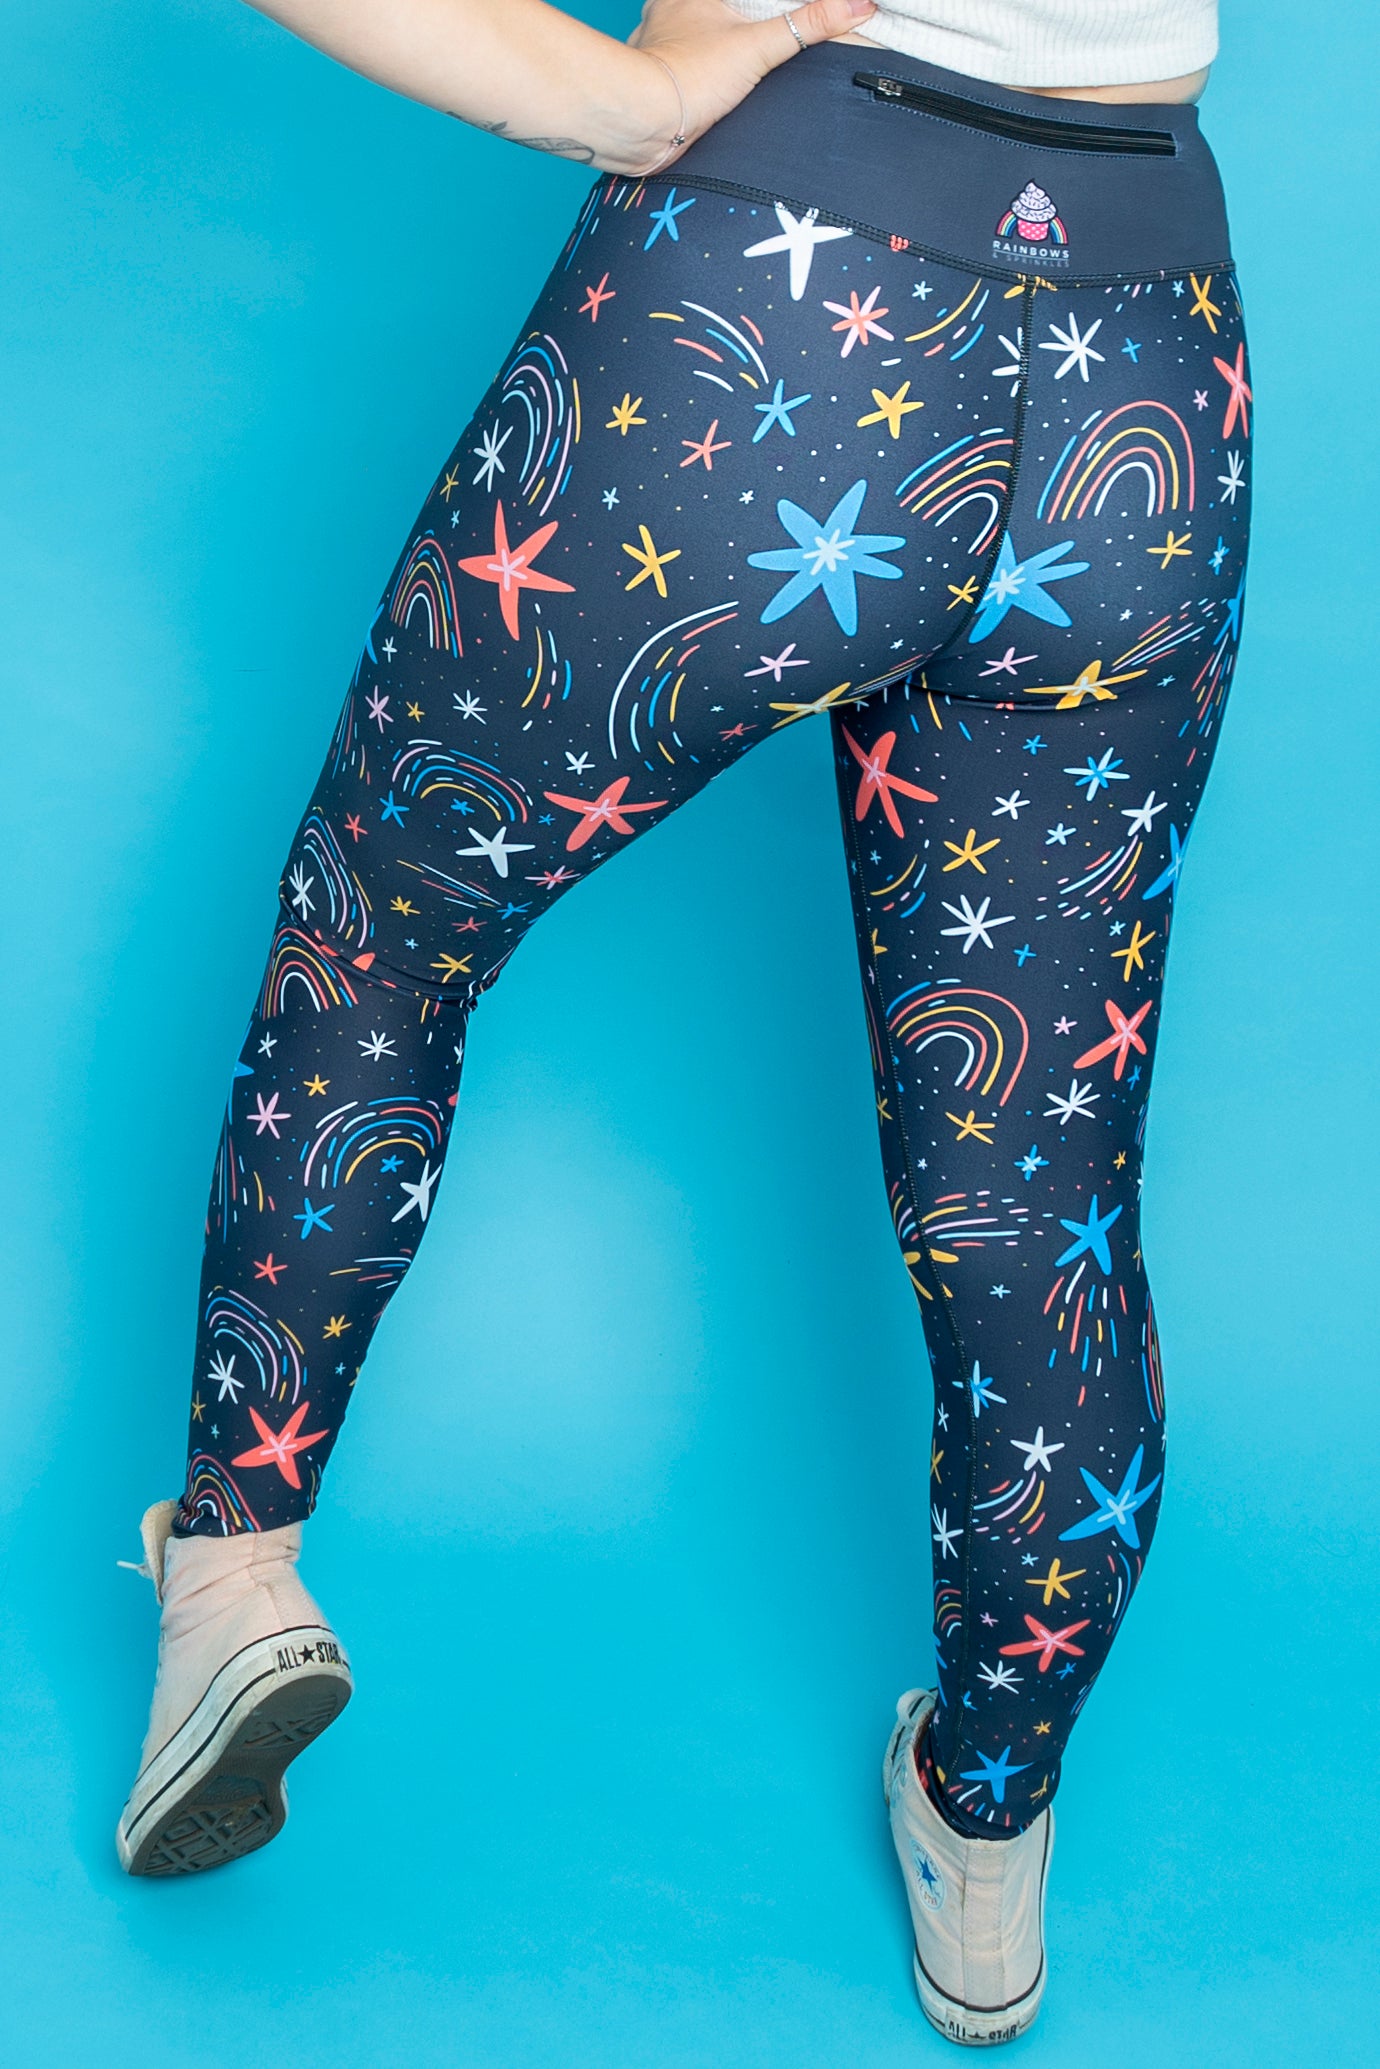 Shooting Stars Women's Activewear Leggings - Tall 33 inside leg – Rainbows  & Sprinkles